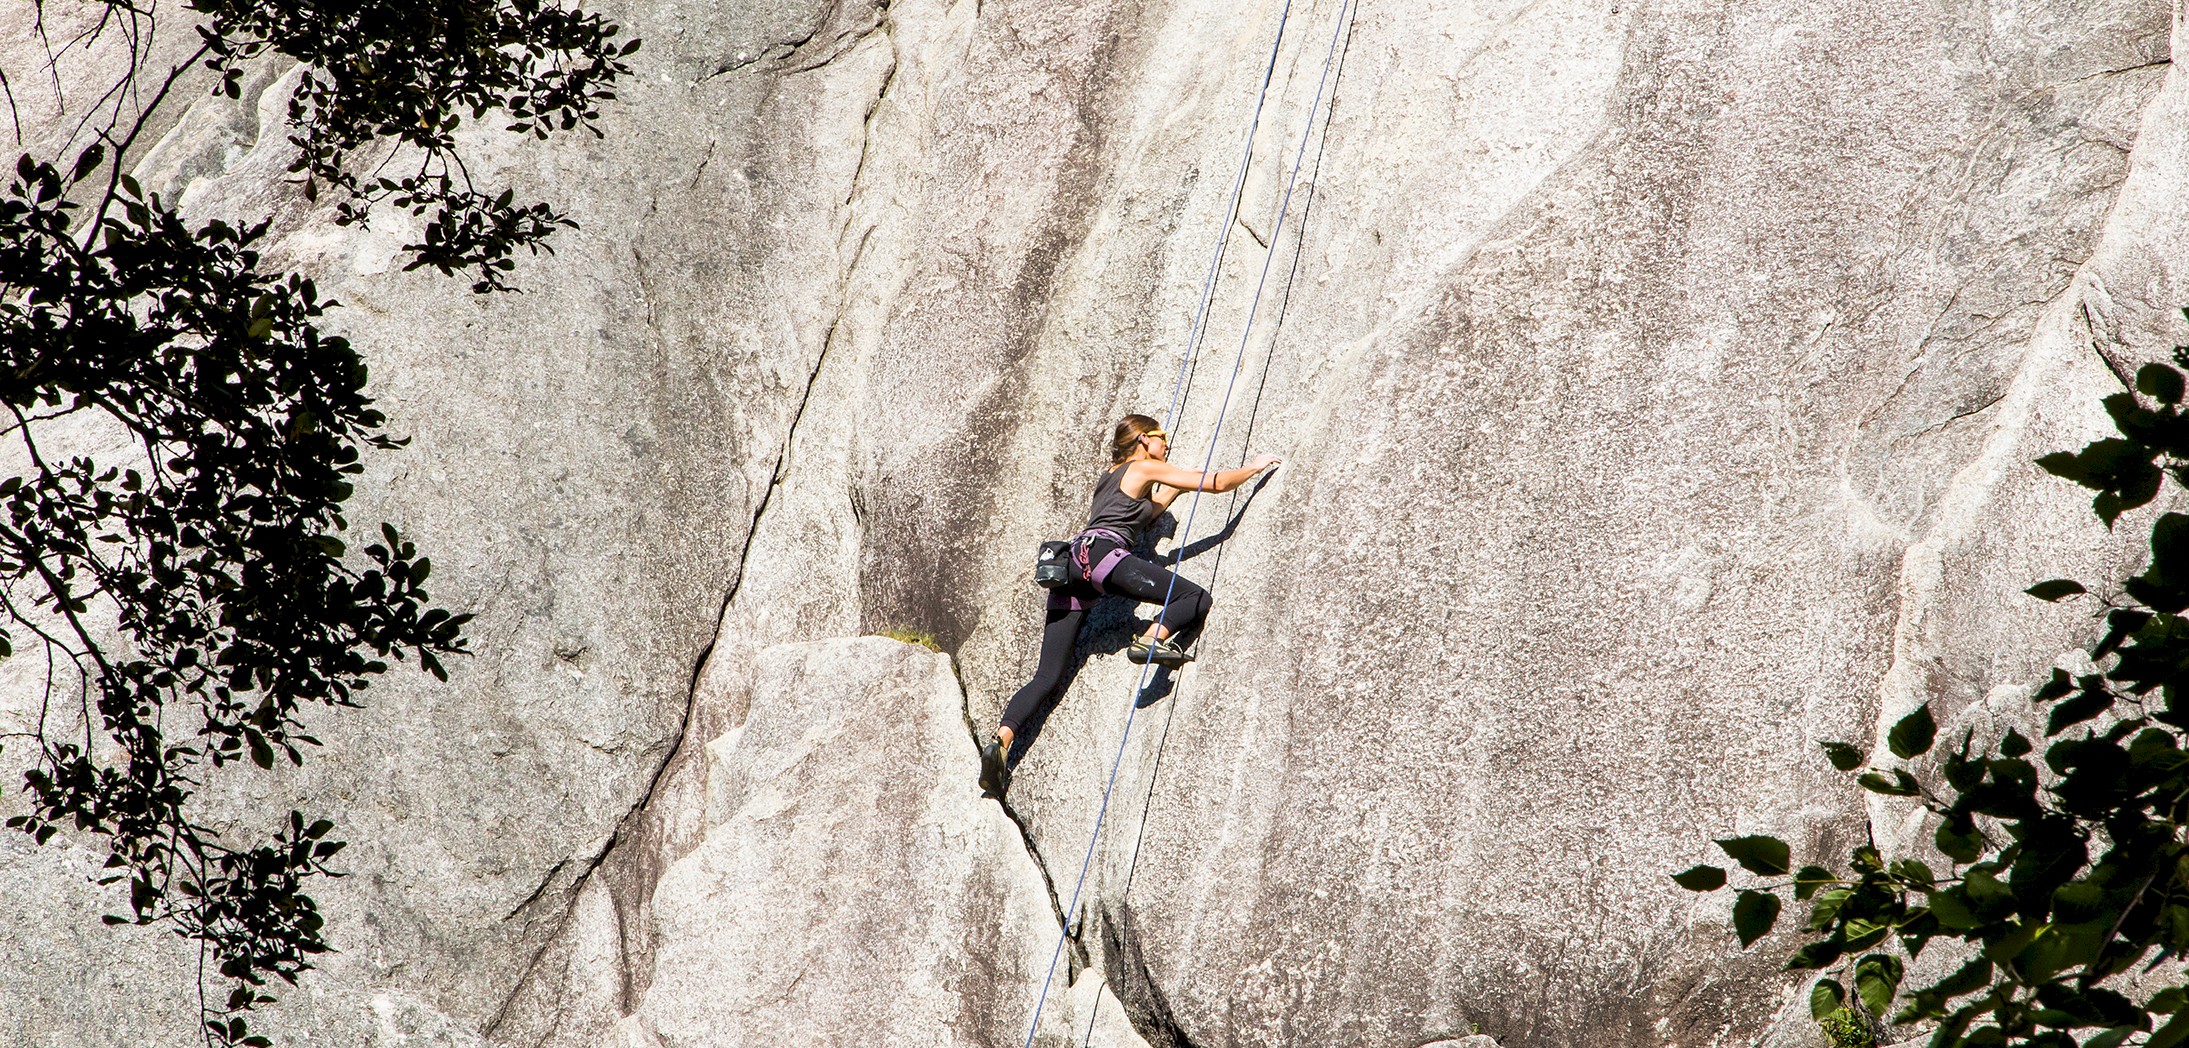 Rock Climbing & Bouldering in Squamish, BC